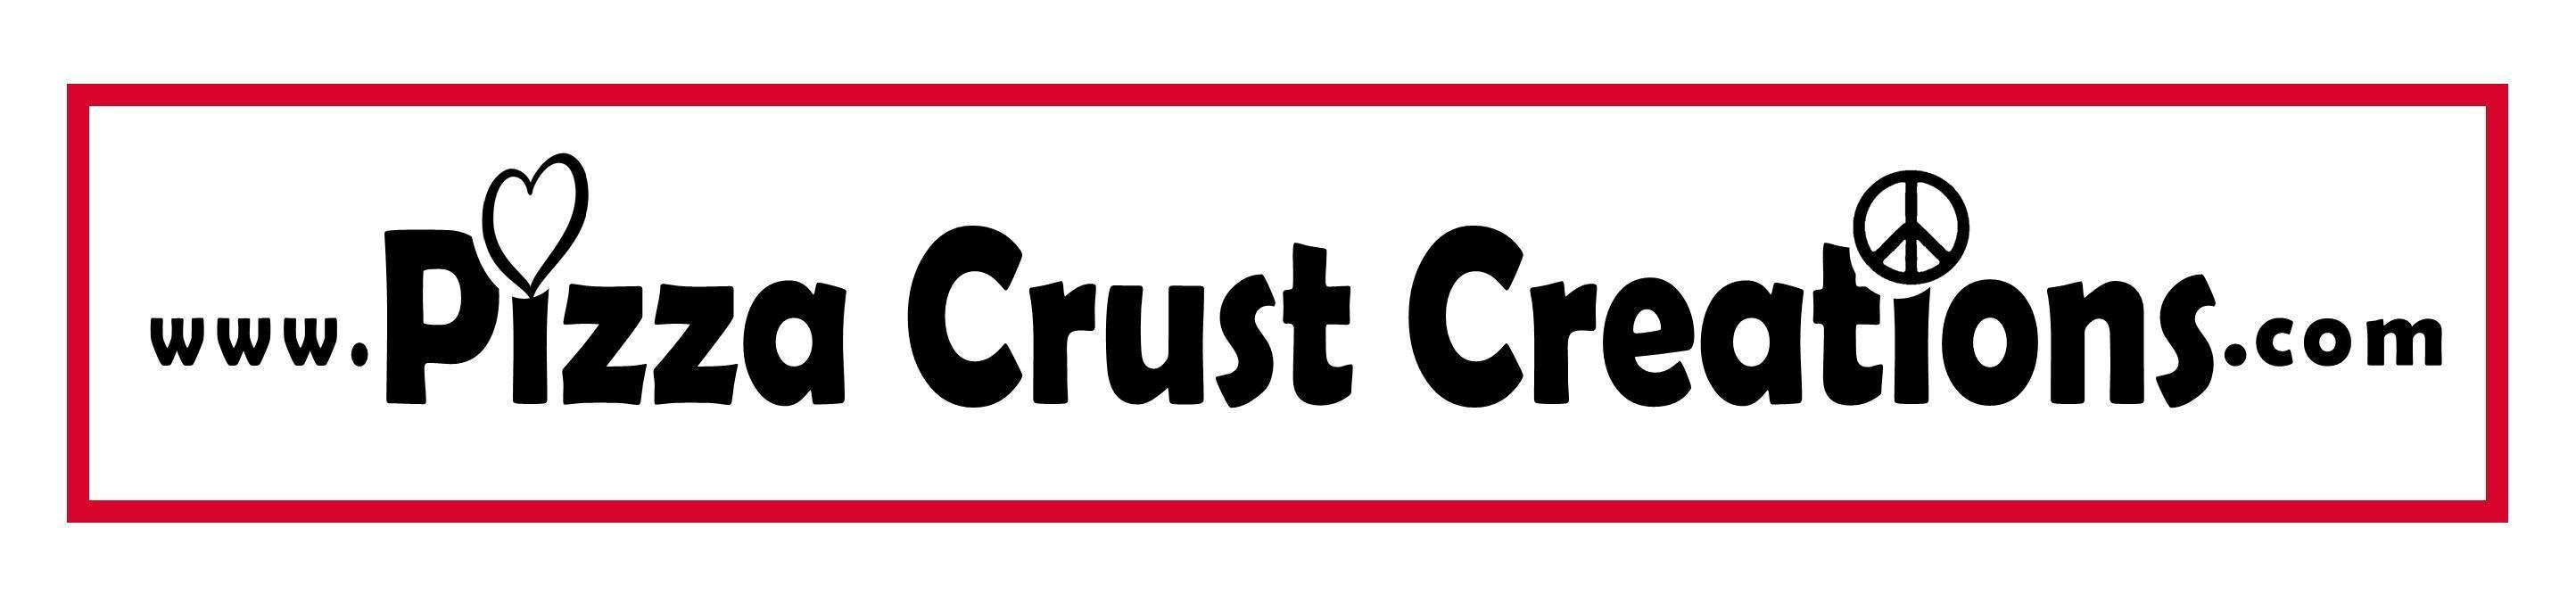 Pizza Crust Creations